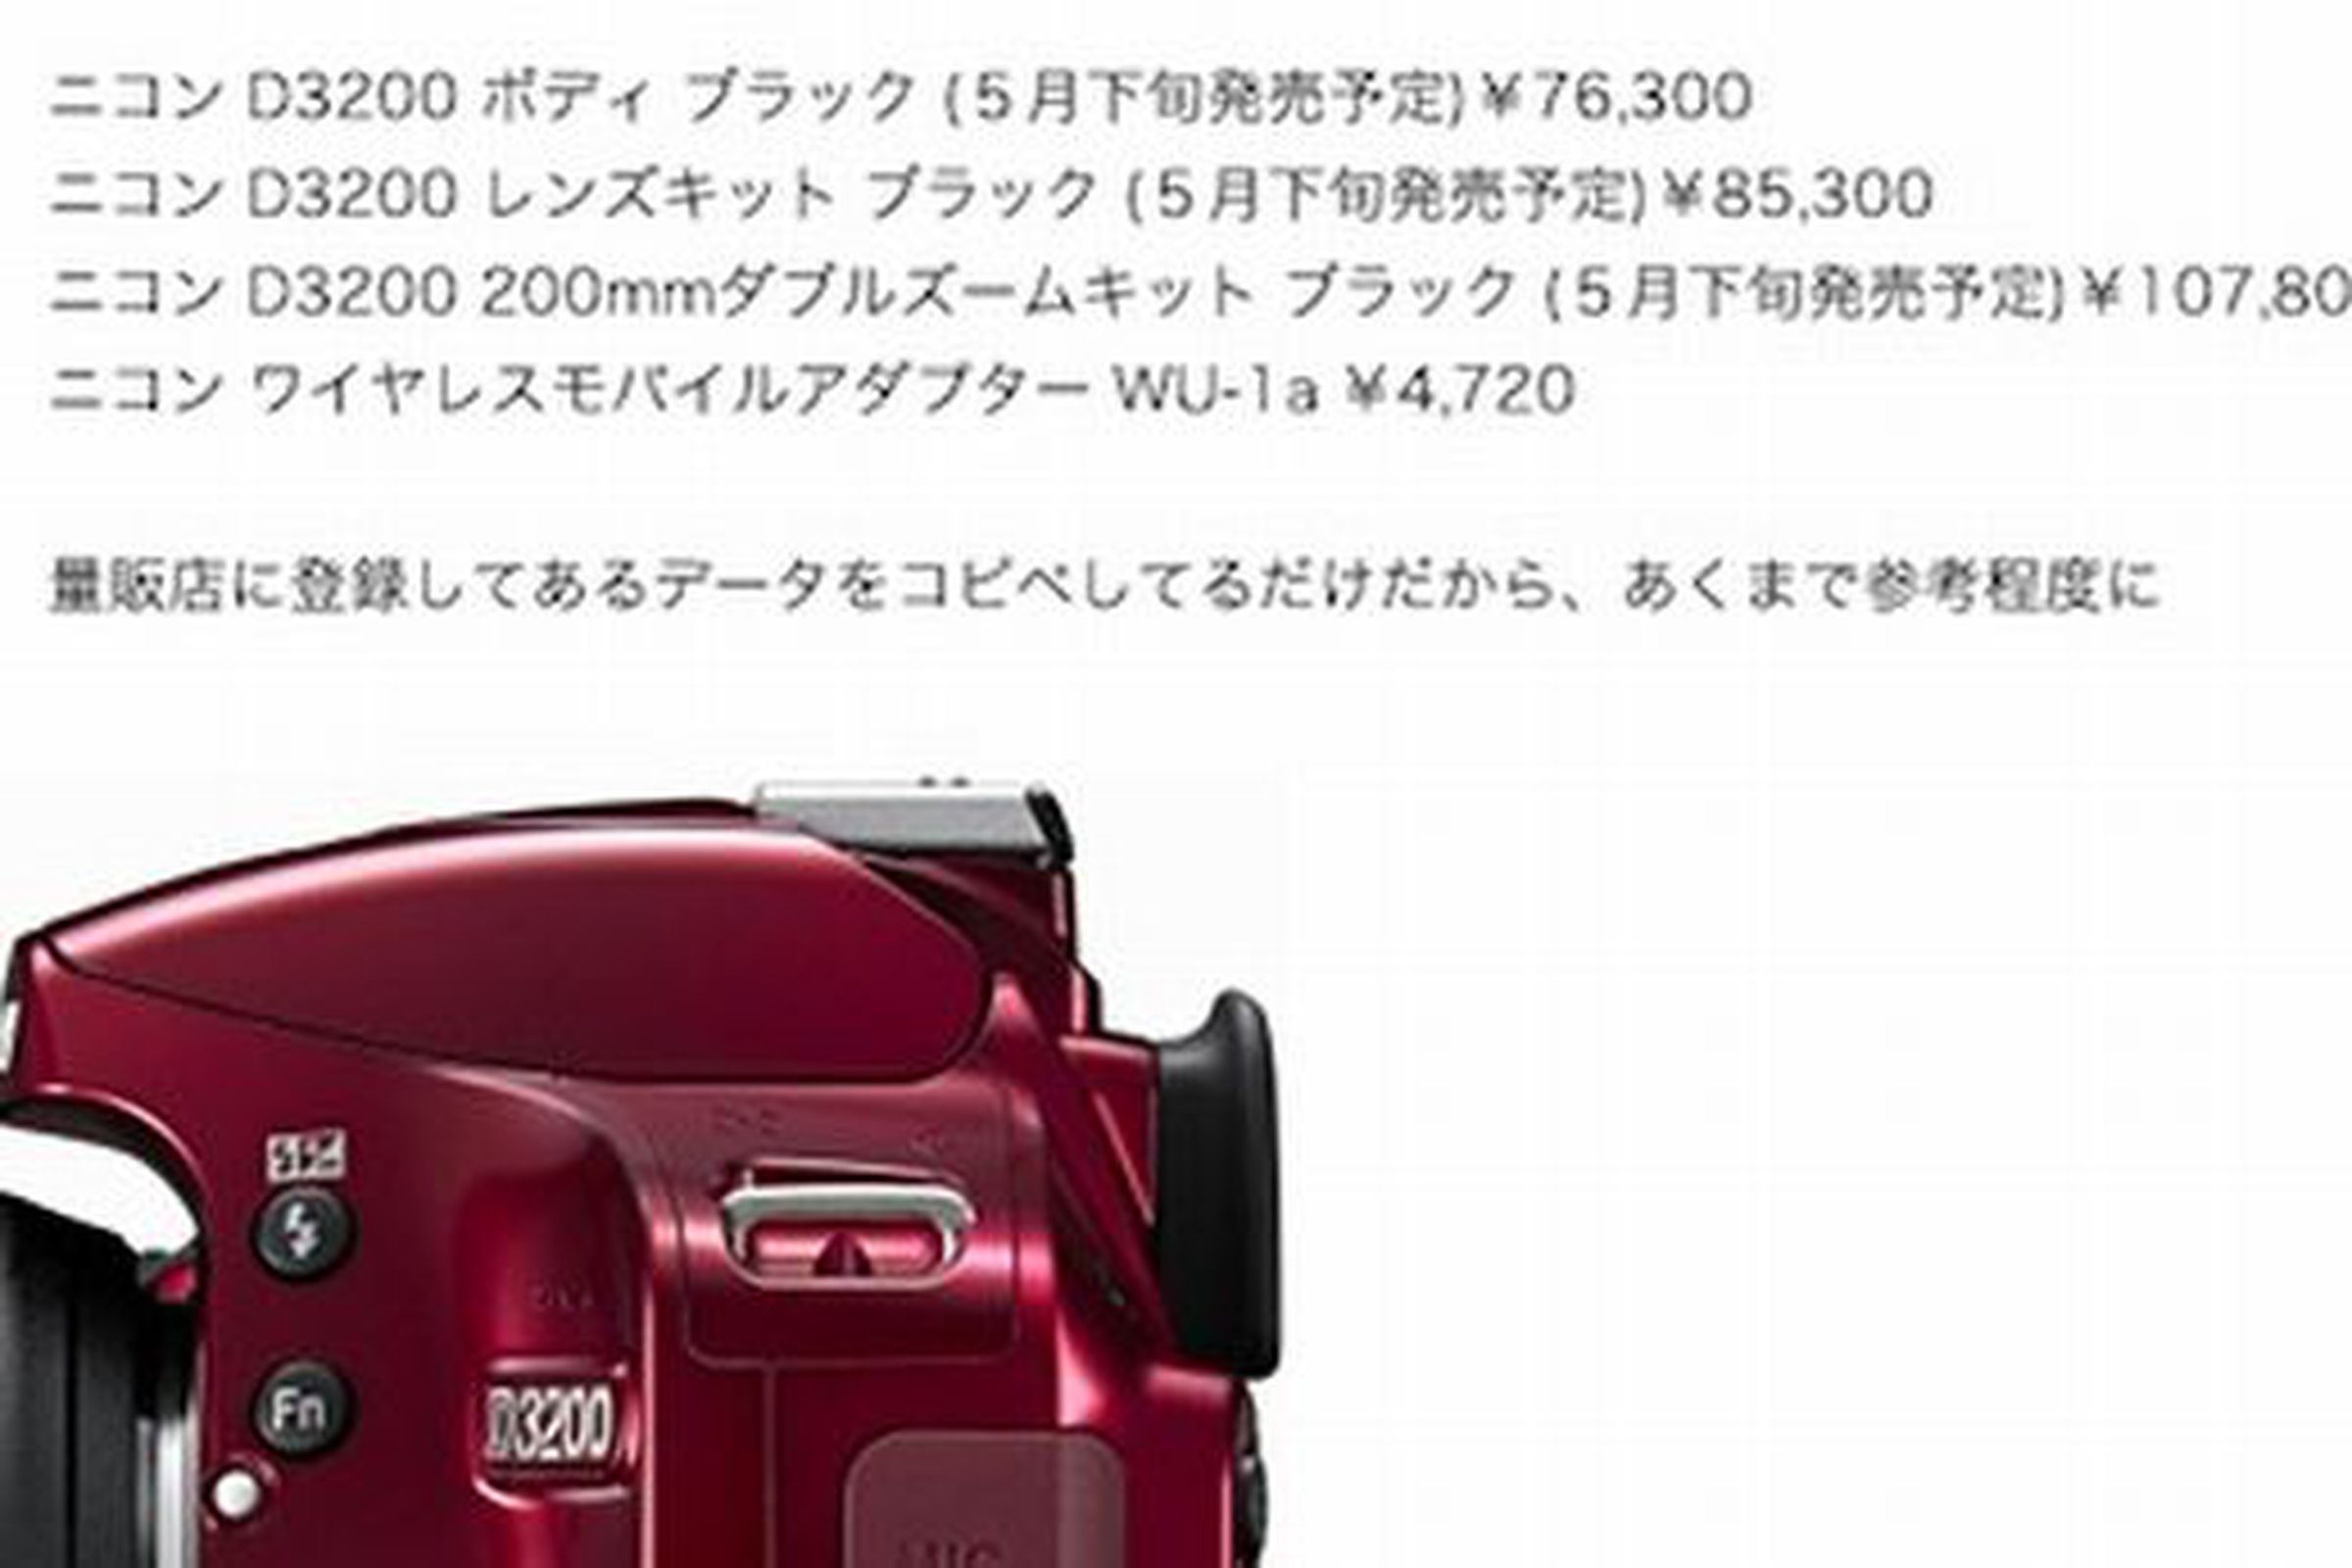 Nikon D3200 rumor